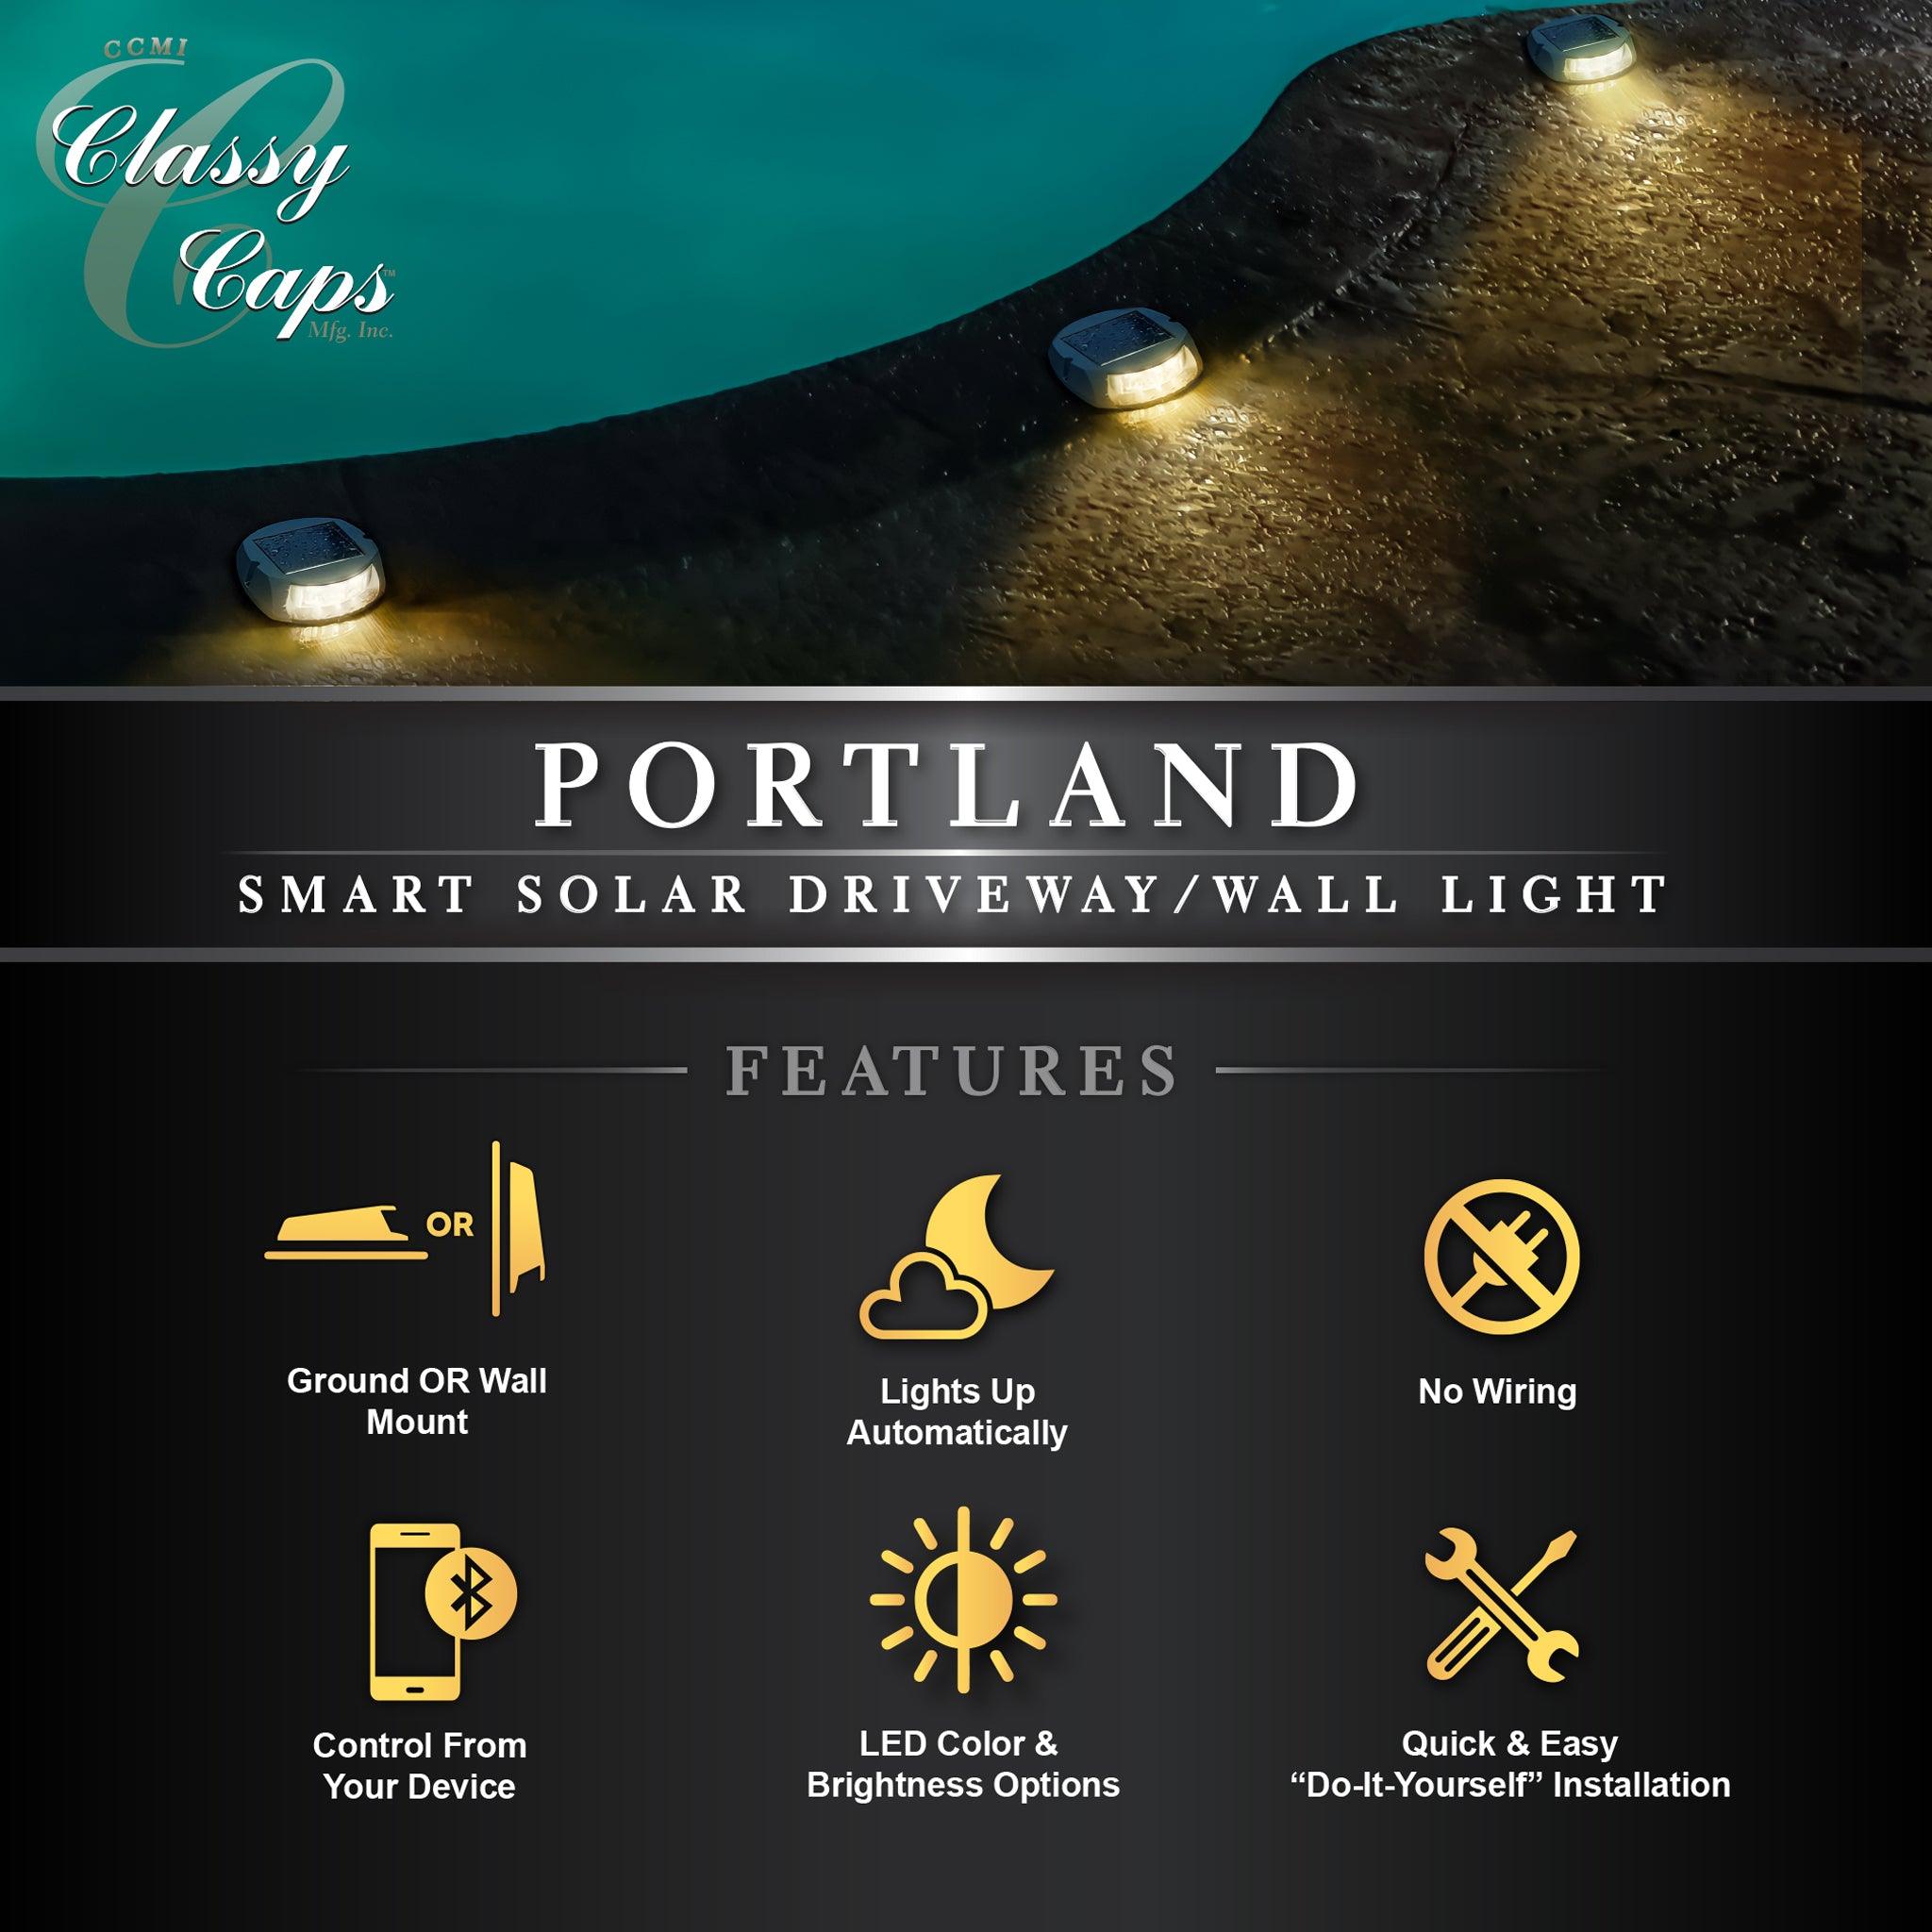 Classy Caps Portland Smart Solar Driveway/Wall Light